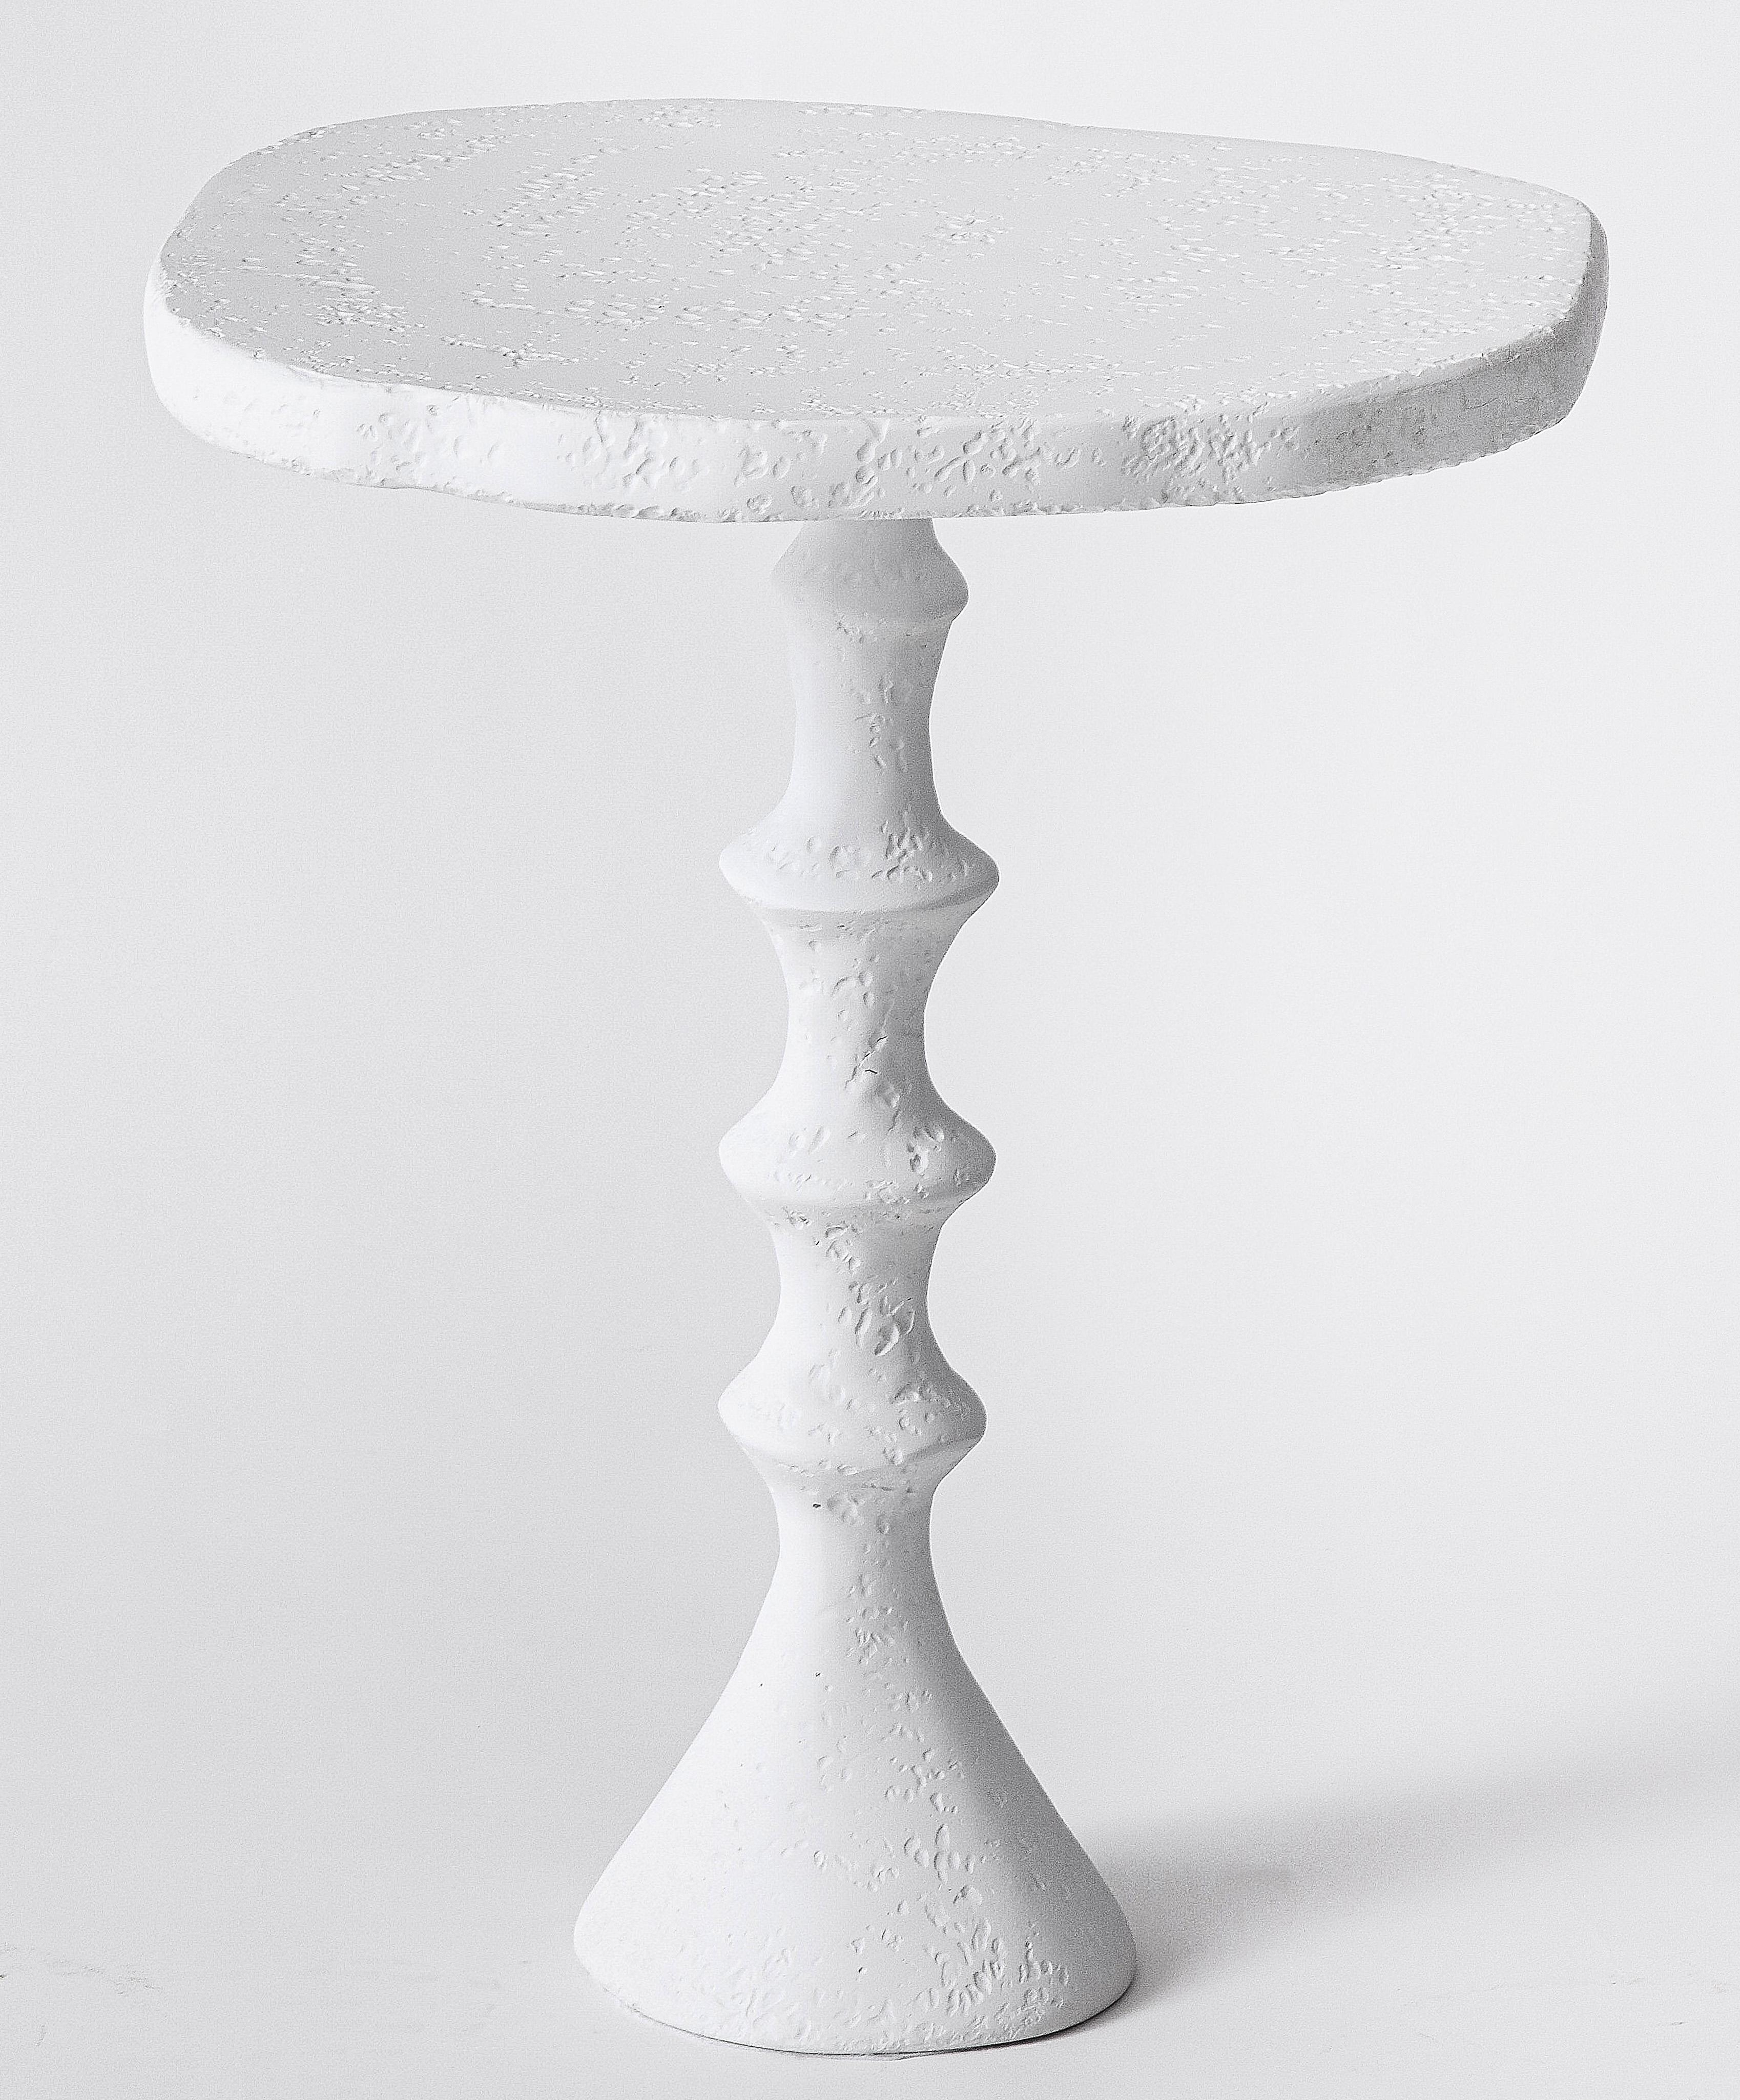 Pair of St Paul Plaster Side Table by Bourgeois Boheme Atelier 'Petit Modèle' For Sale 3